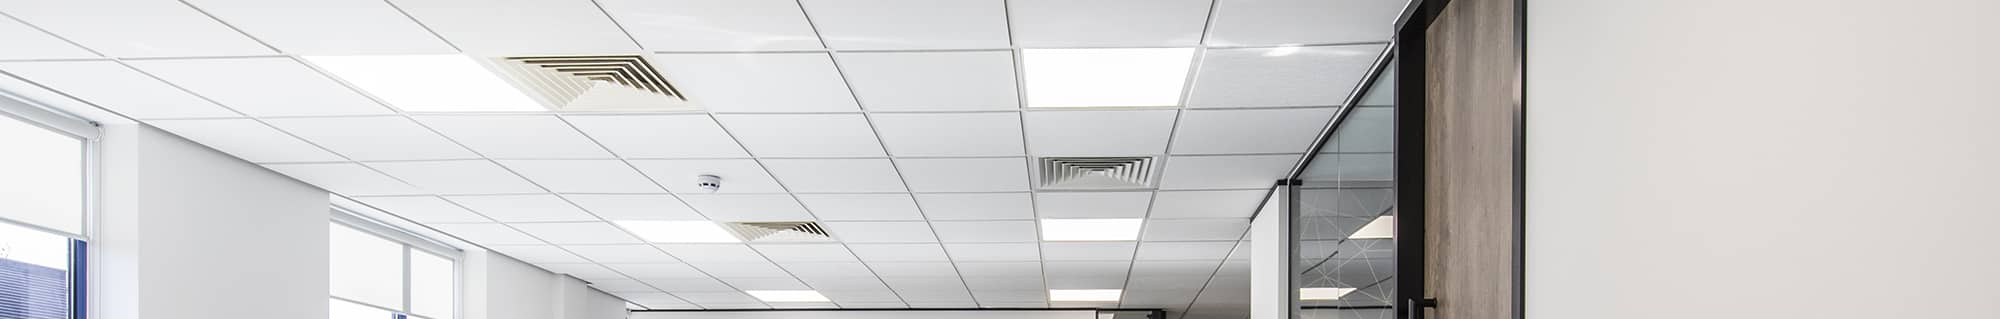 recessed ceiling lighting